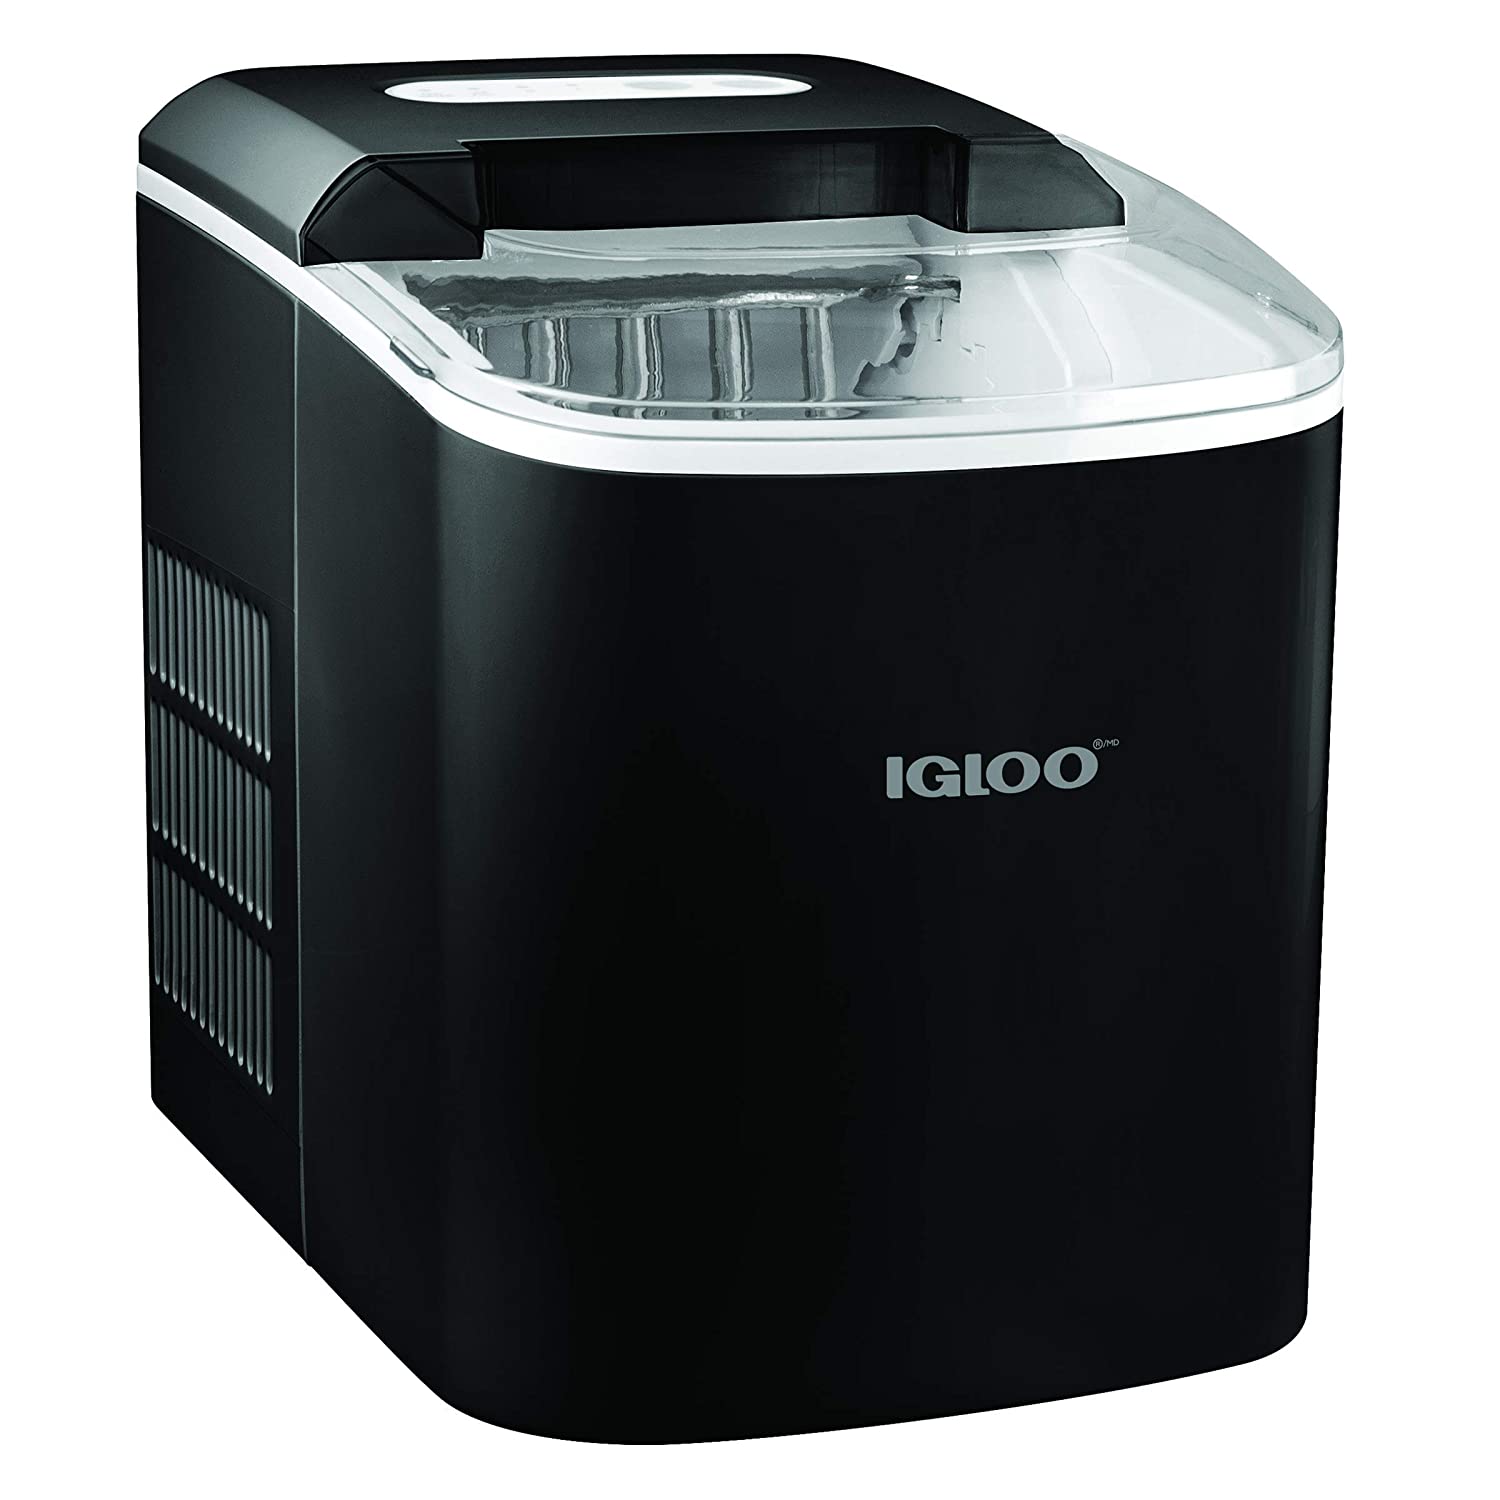 igloo-portable-automatic-ice-maker-porta